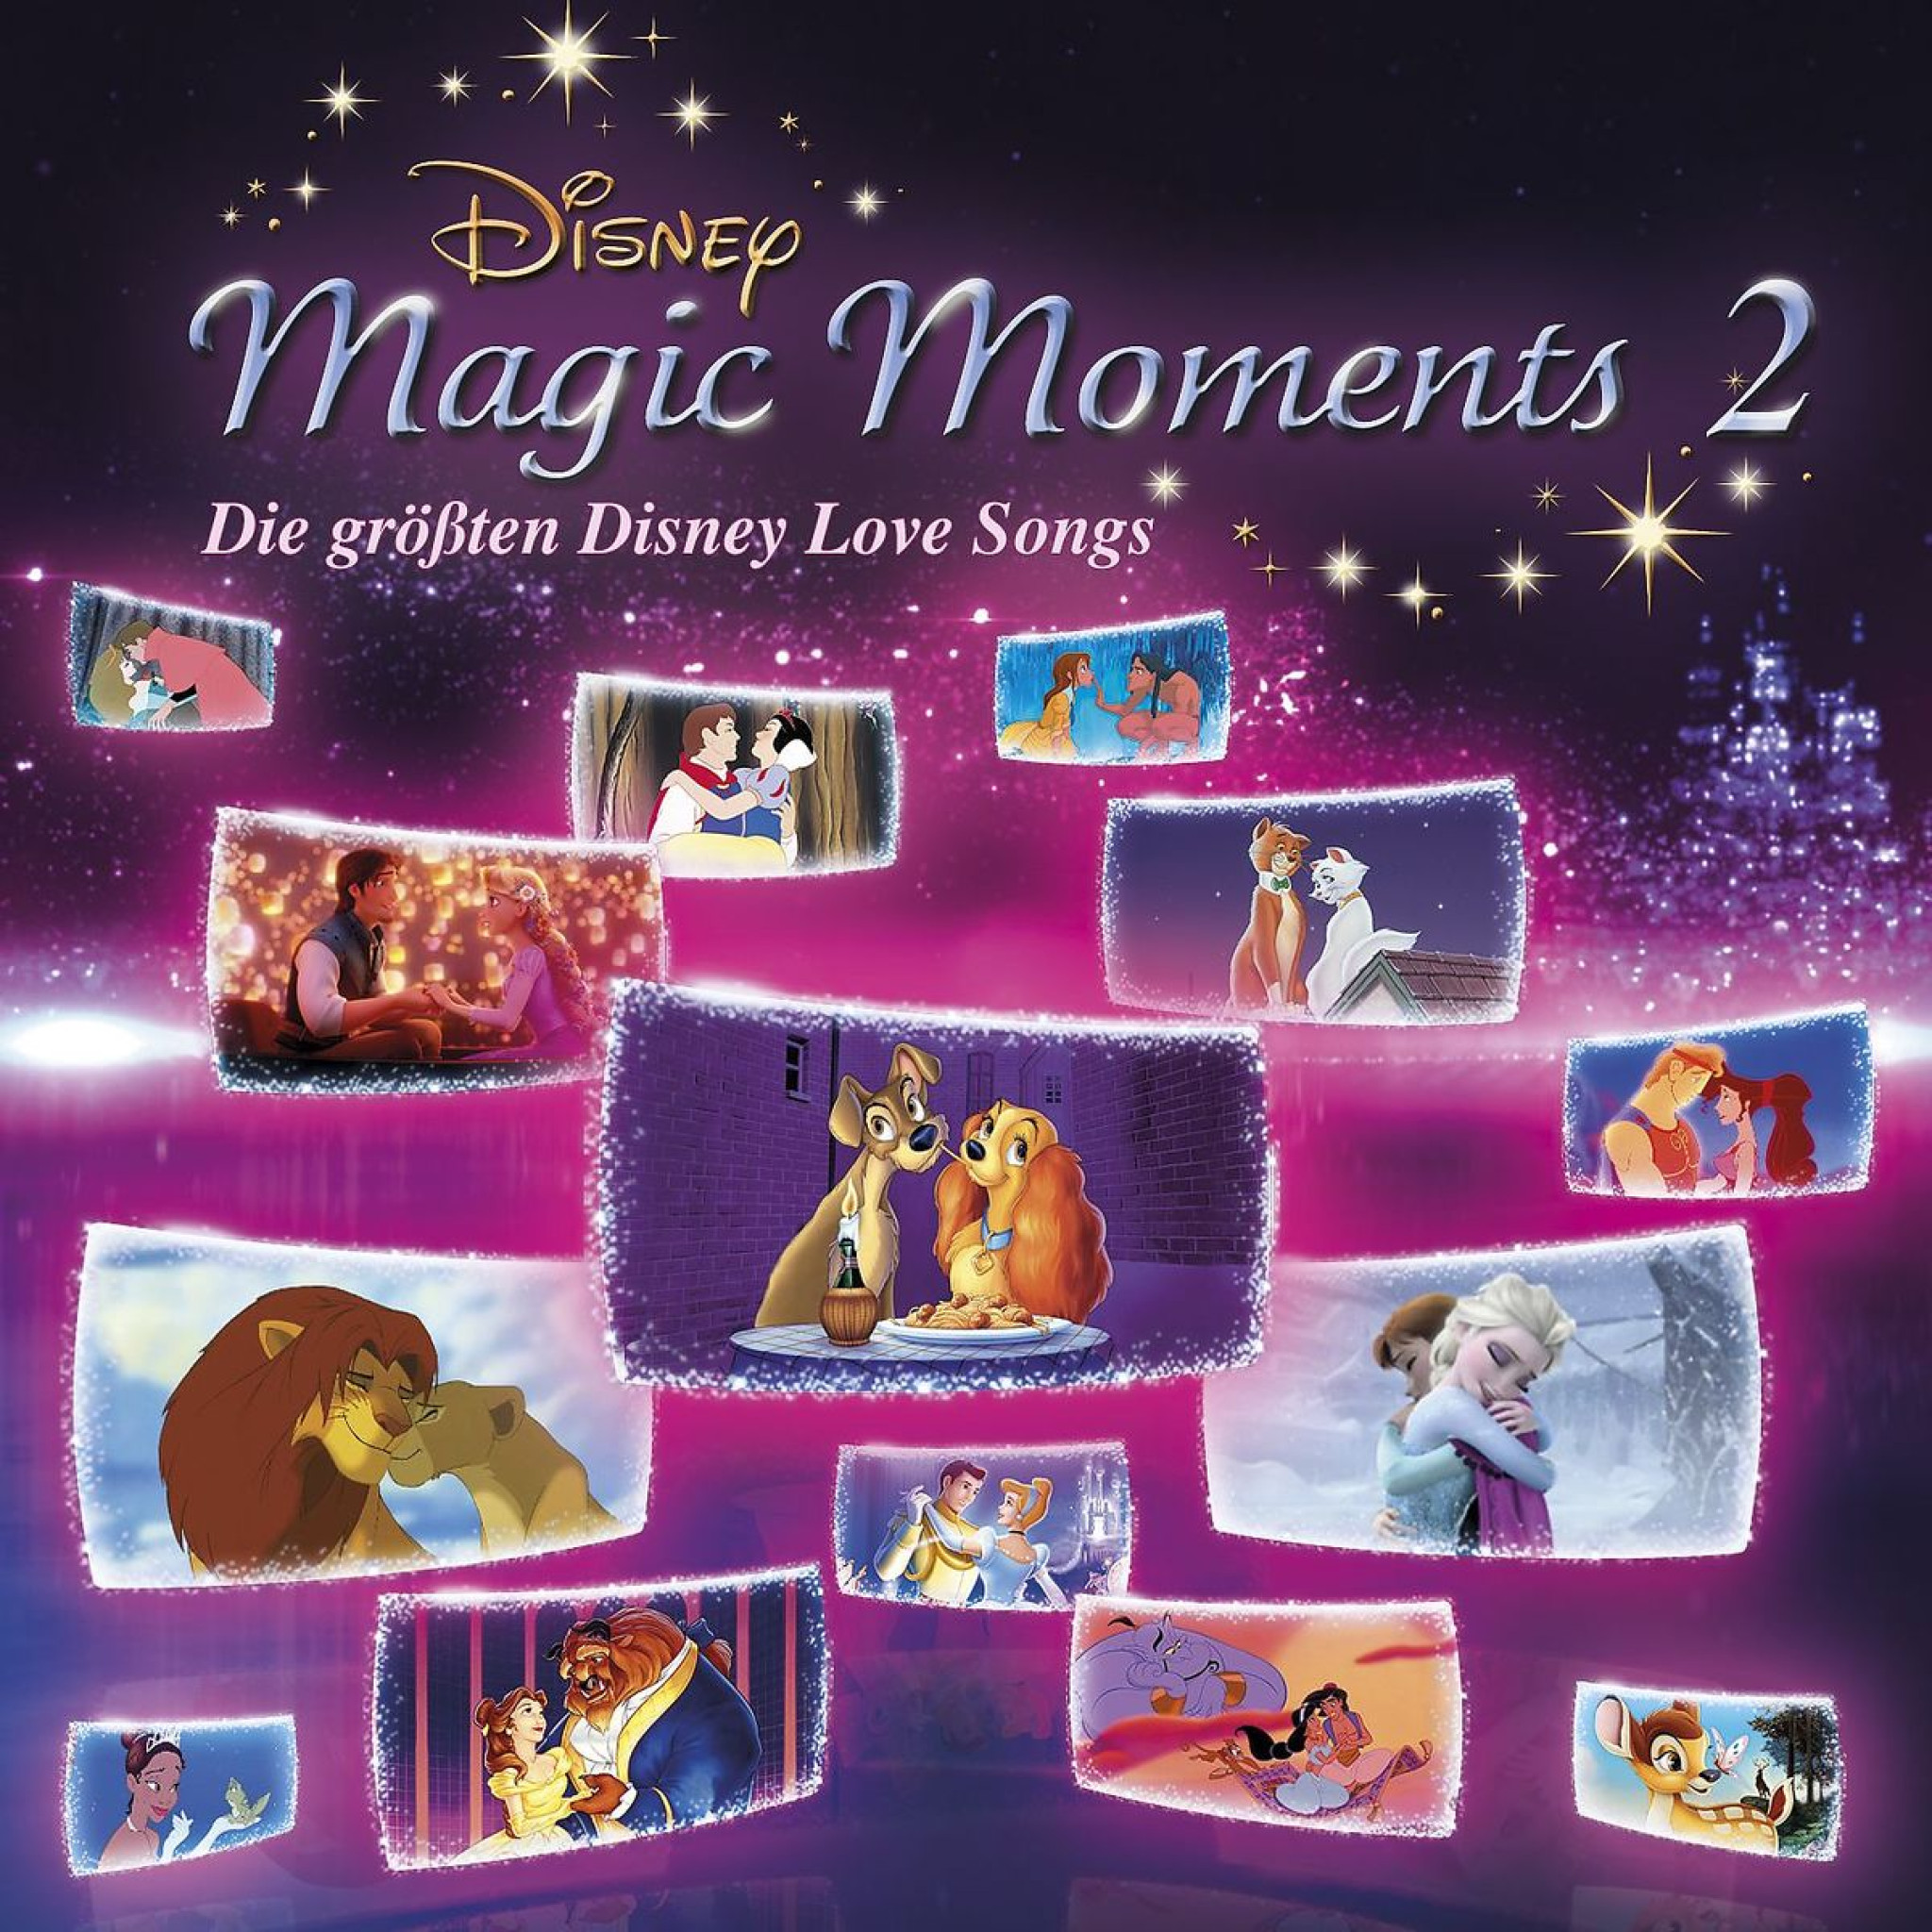 Disney Magic Moments 2 - Größte Disney Lovesongs